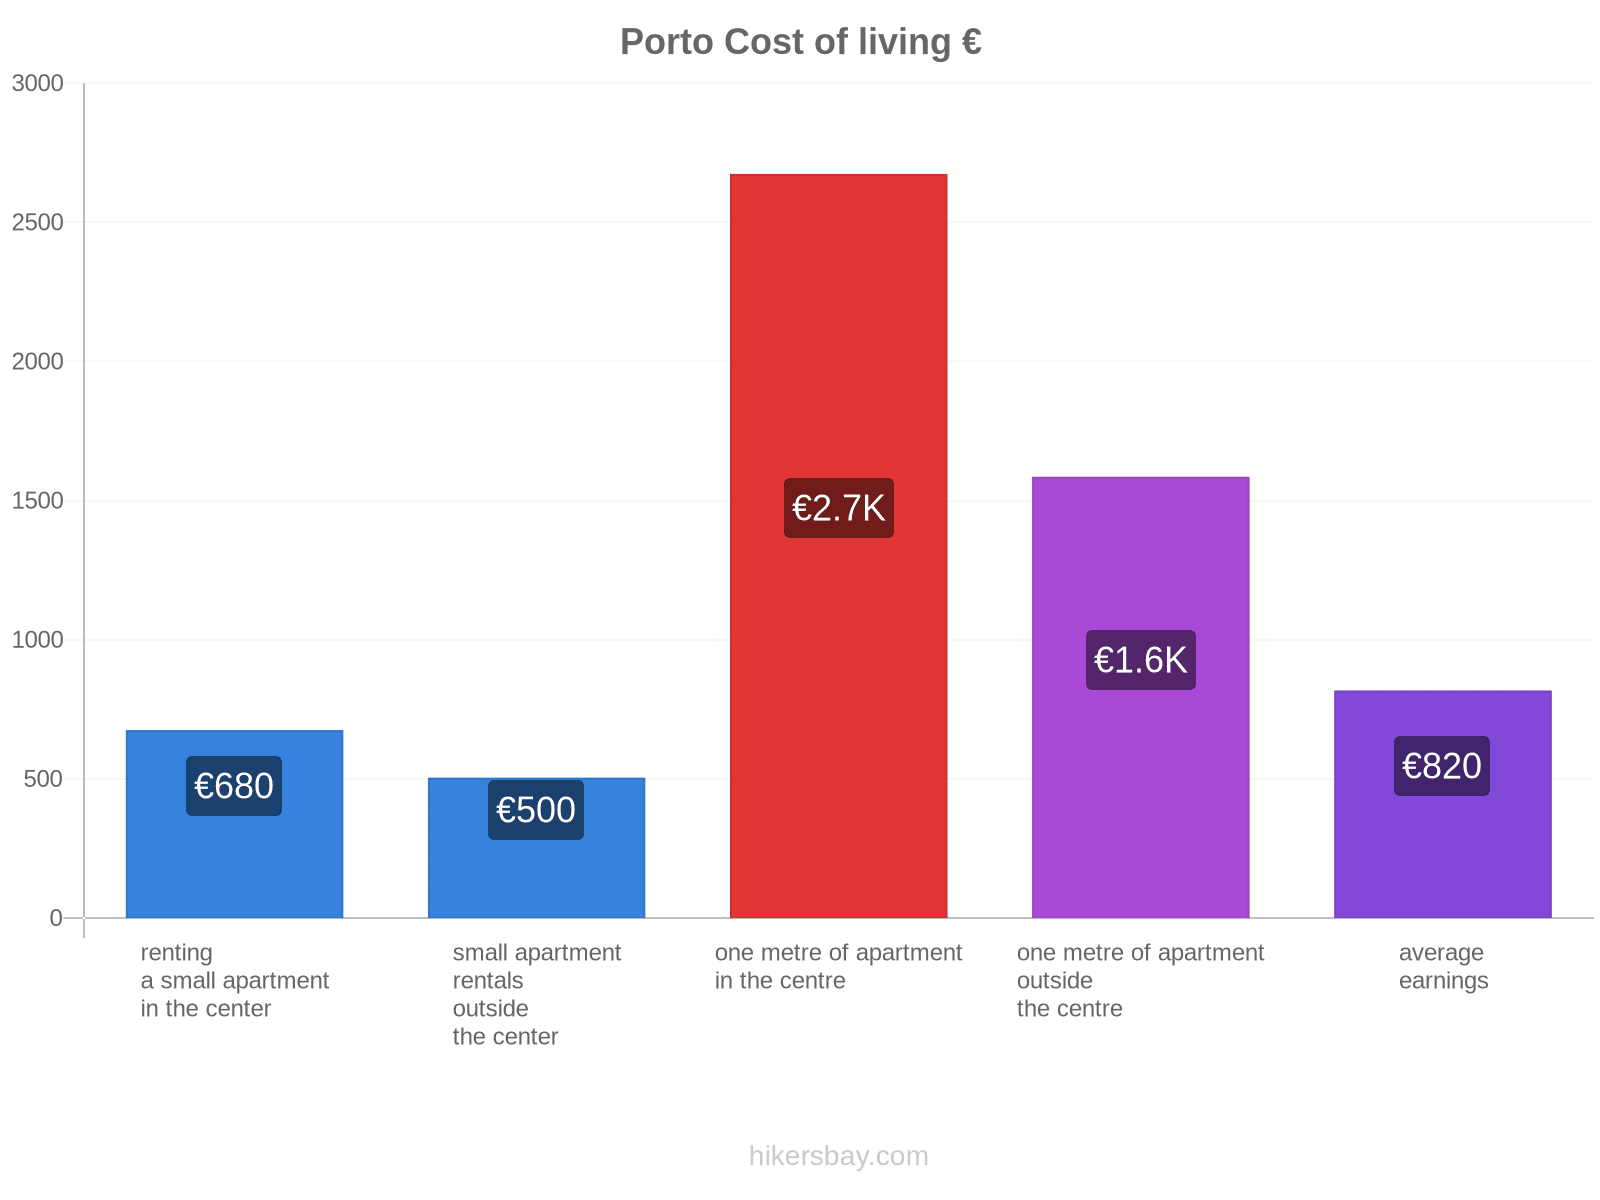 Porto cost of living hikersbay.com